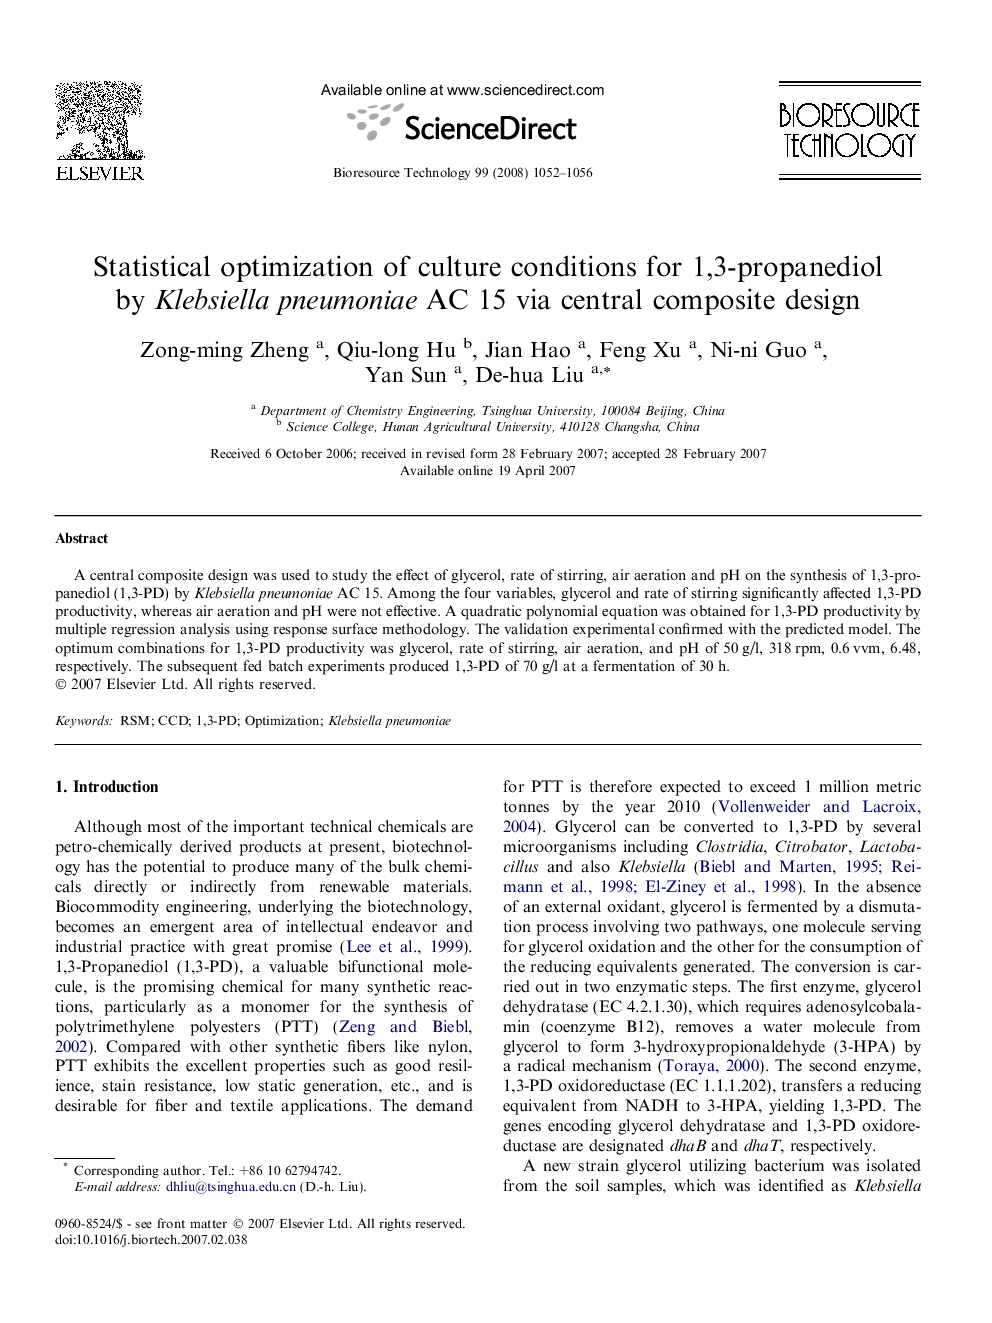 Statistical optimization of culture conditions for 1,3-propanediol by Klebsiella pneumoniae AC 15 via central composite design